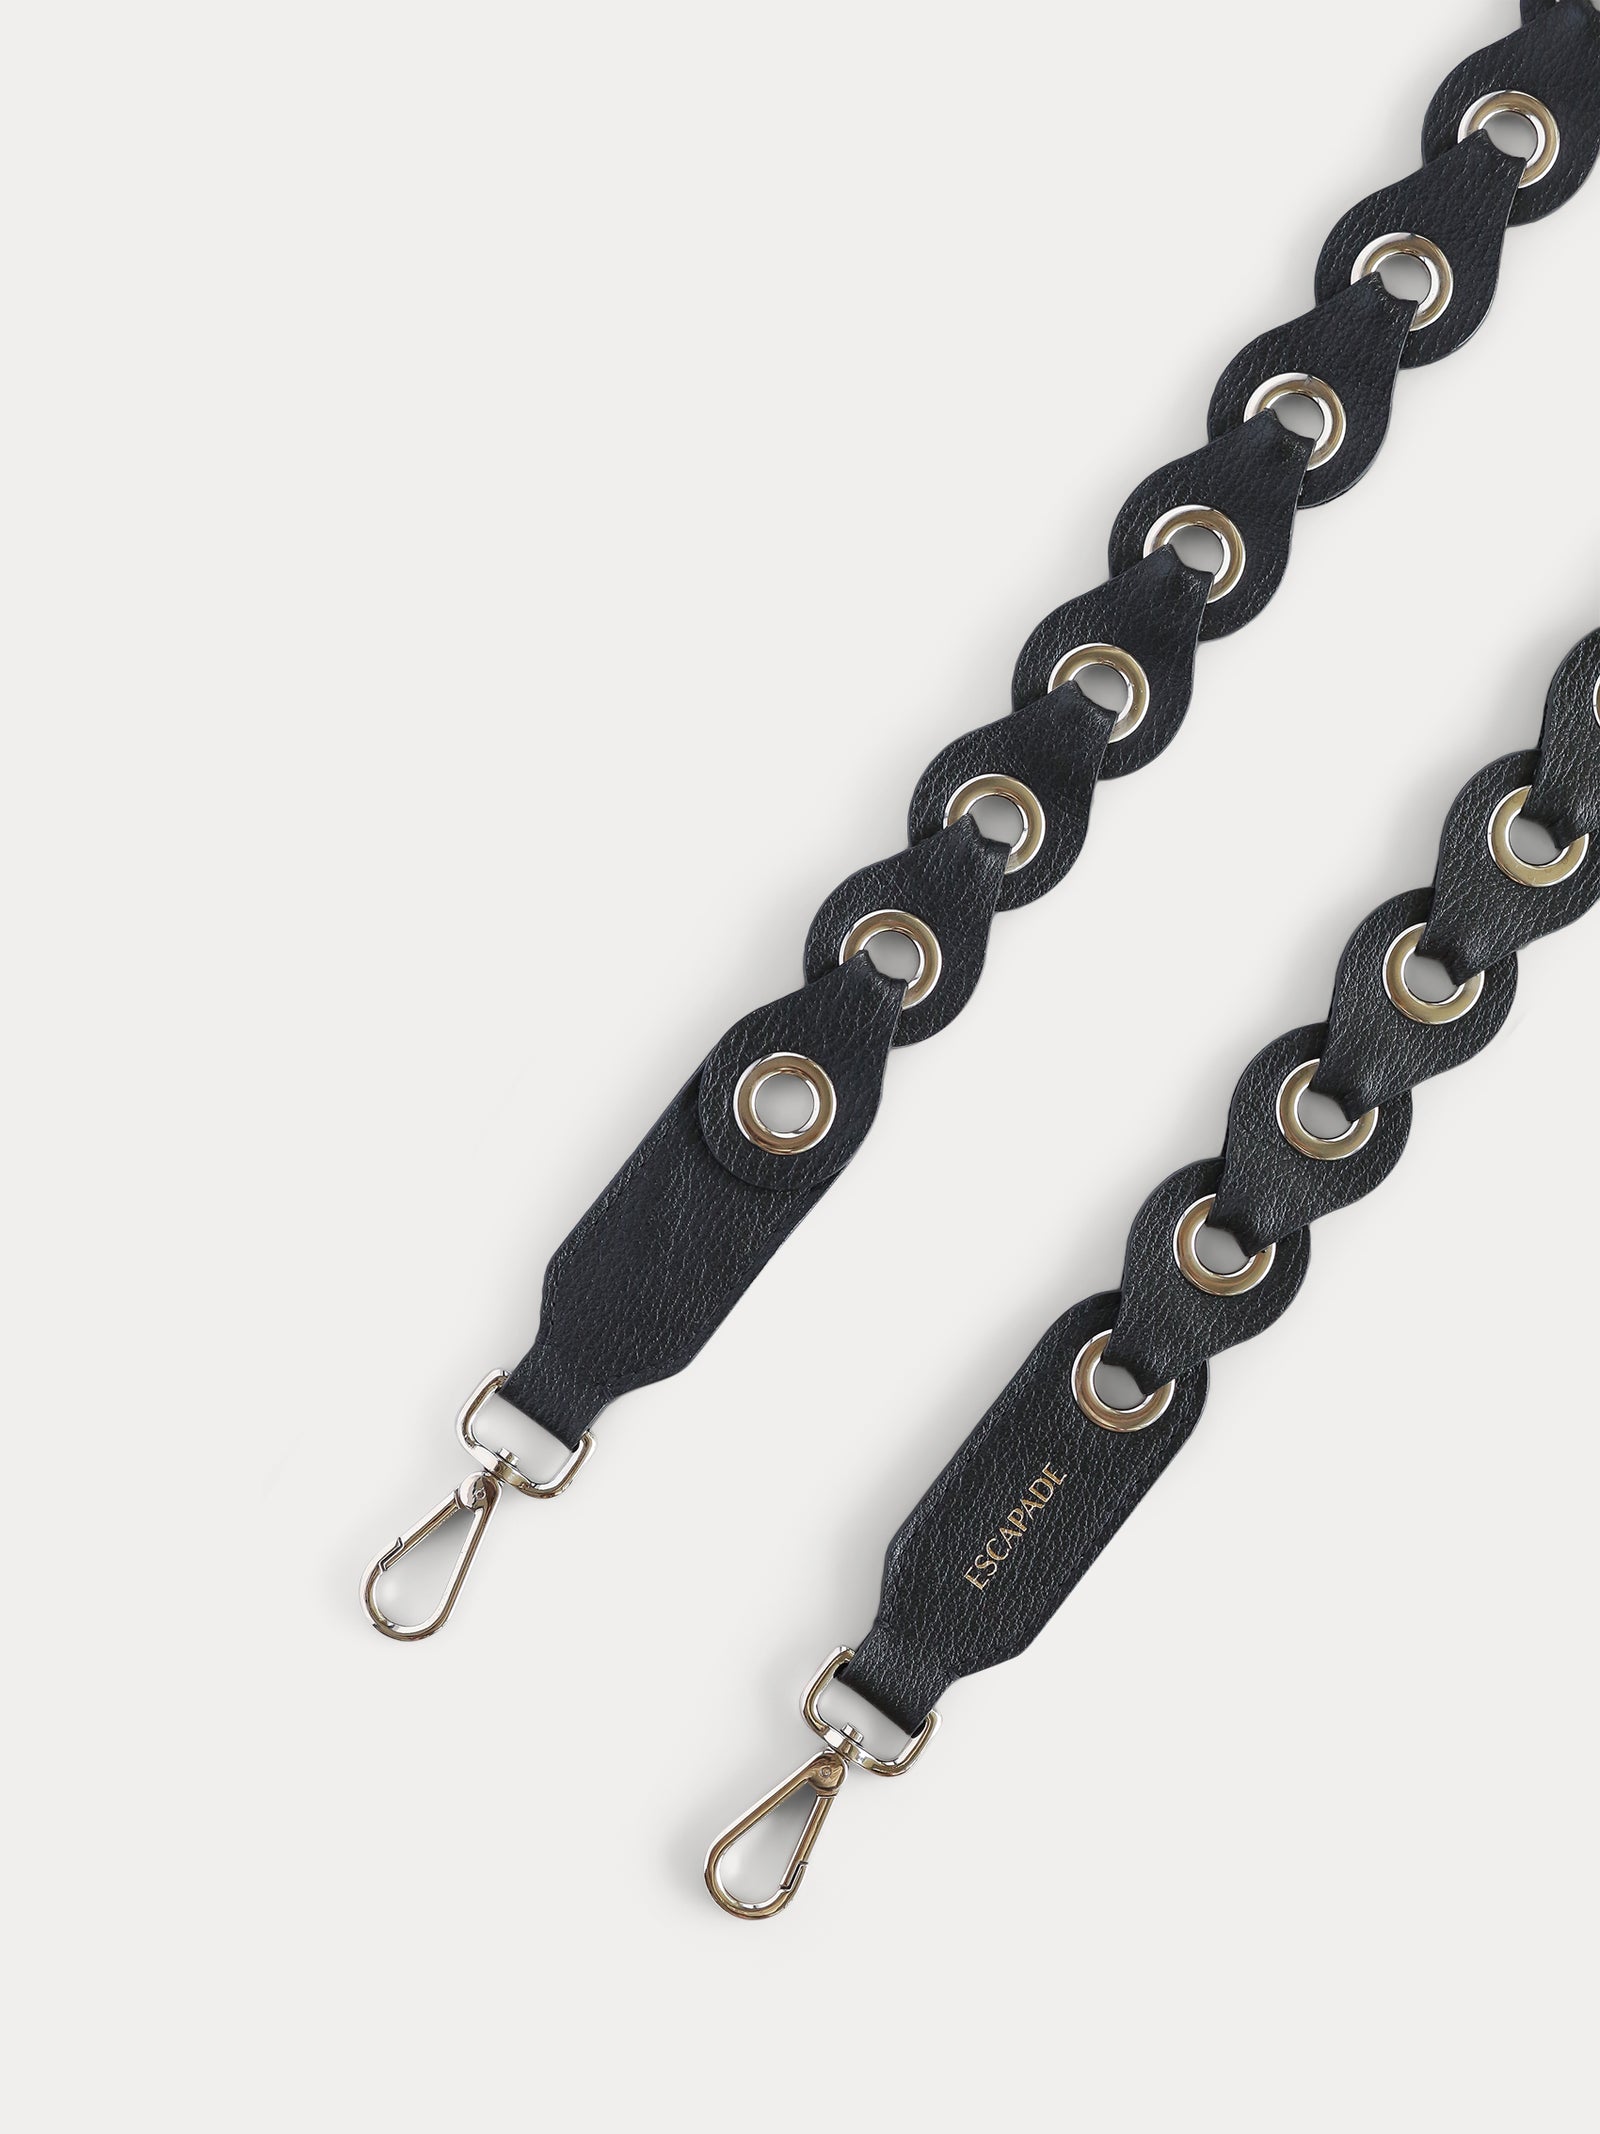 Love Escapade Black Leather Heart Bag Charm / Keychain – The Escapade Bag